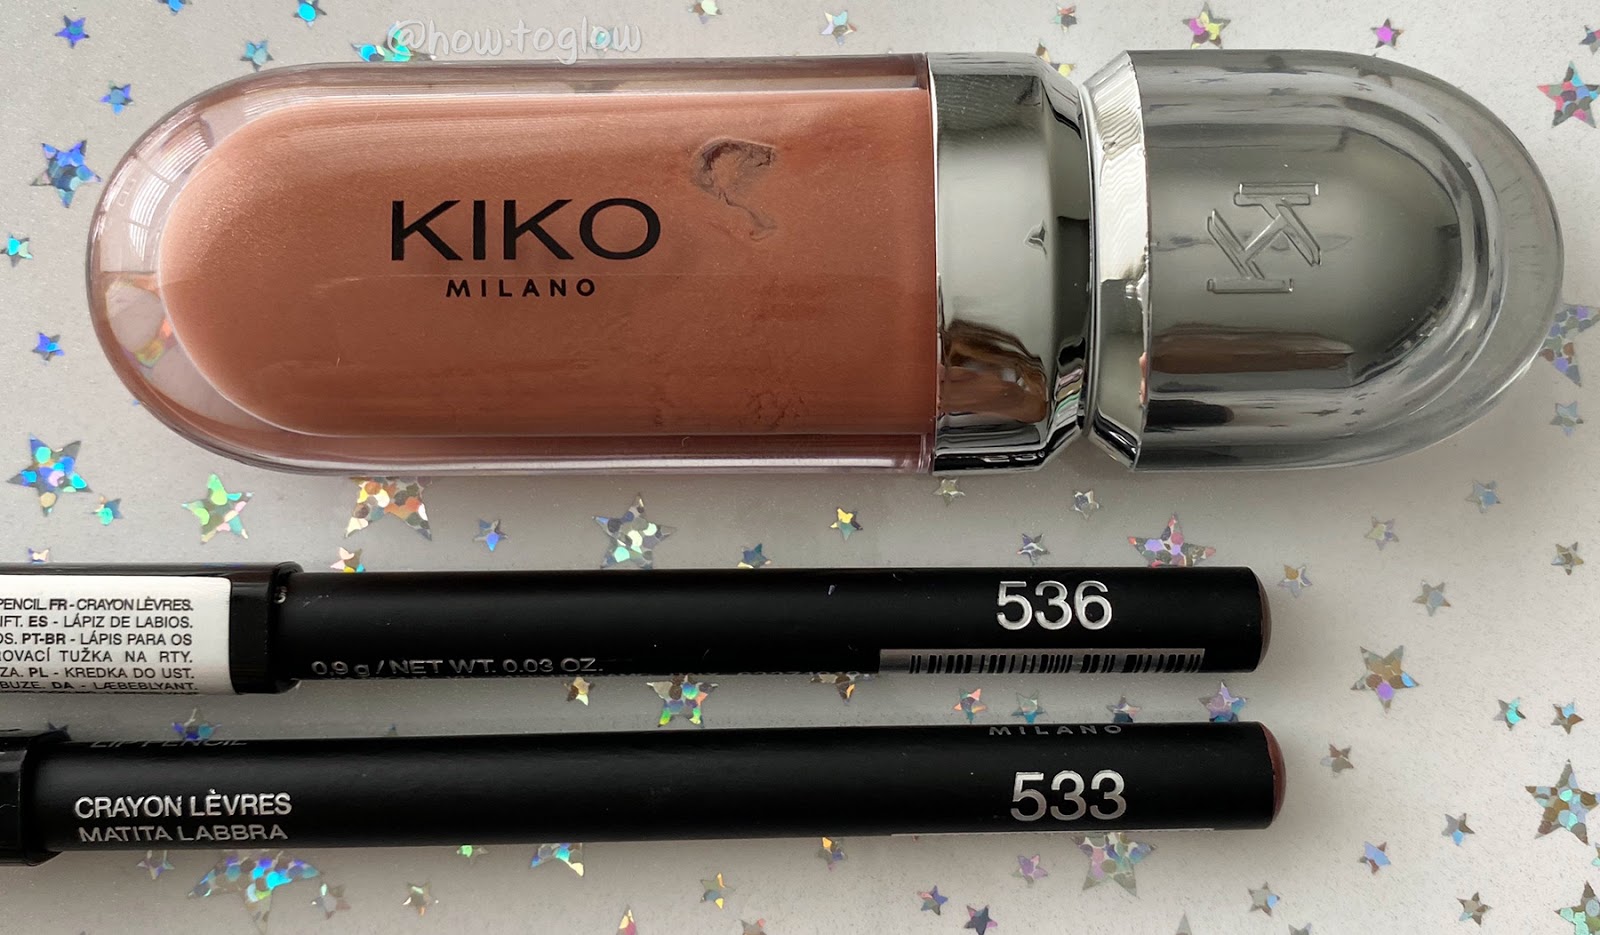 How To Glow: Nude Lip Combinations With Kiko Milano Makeup